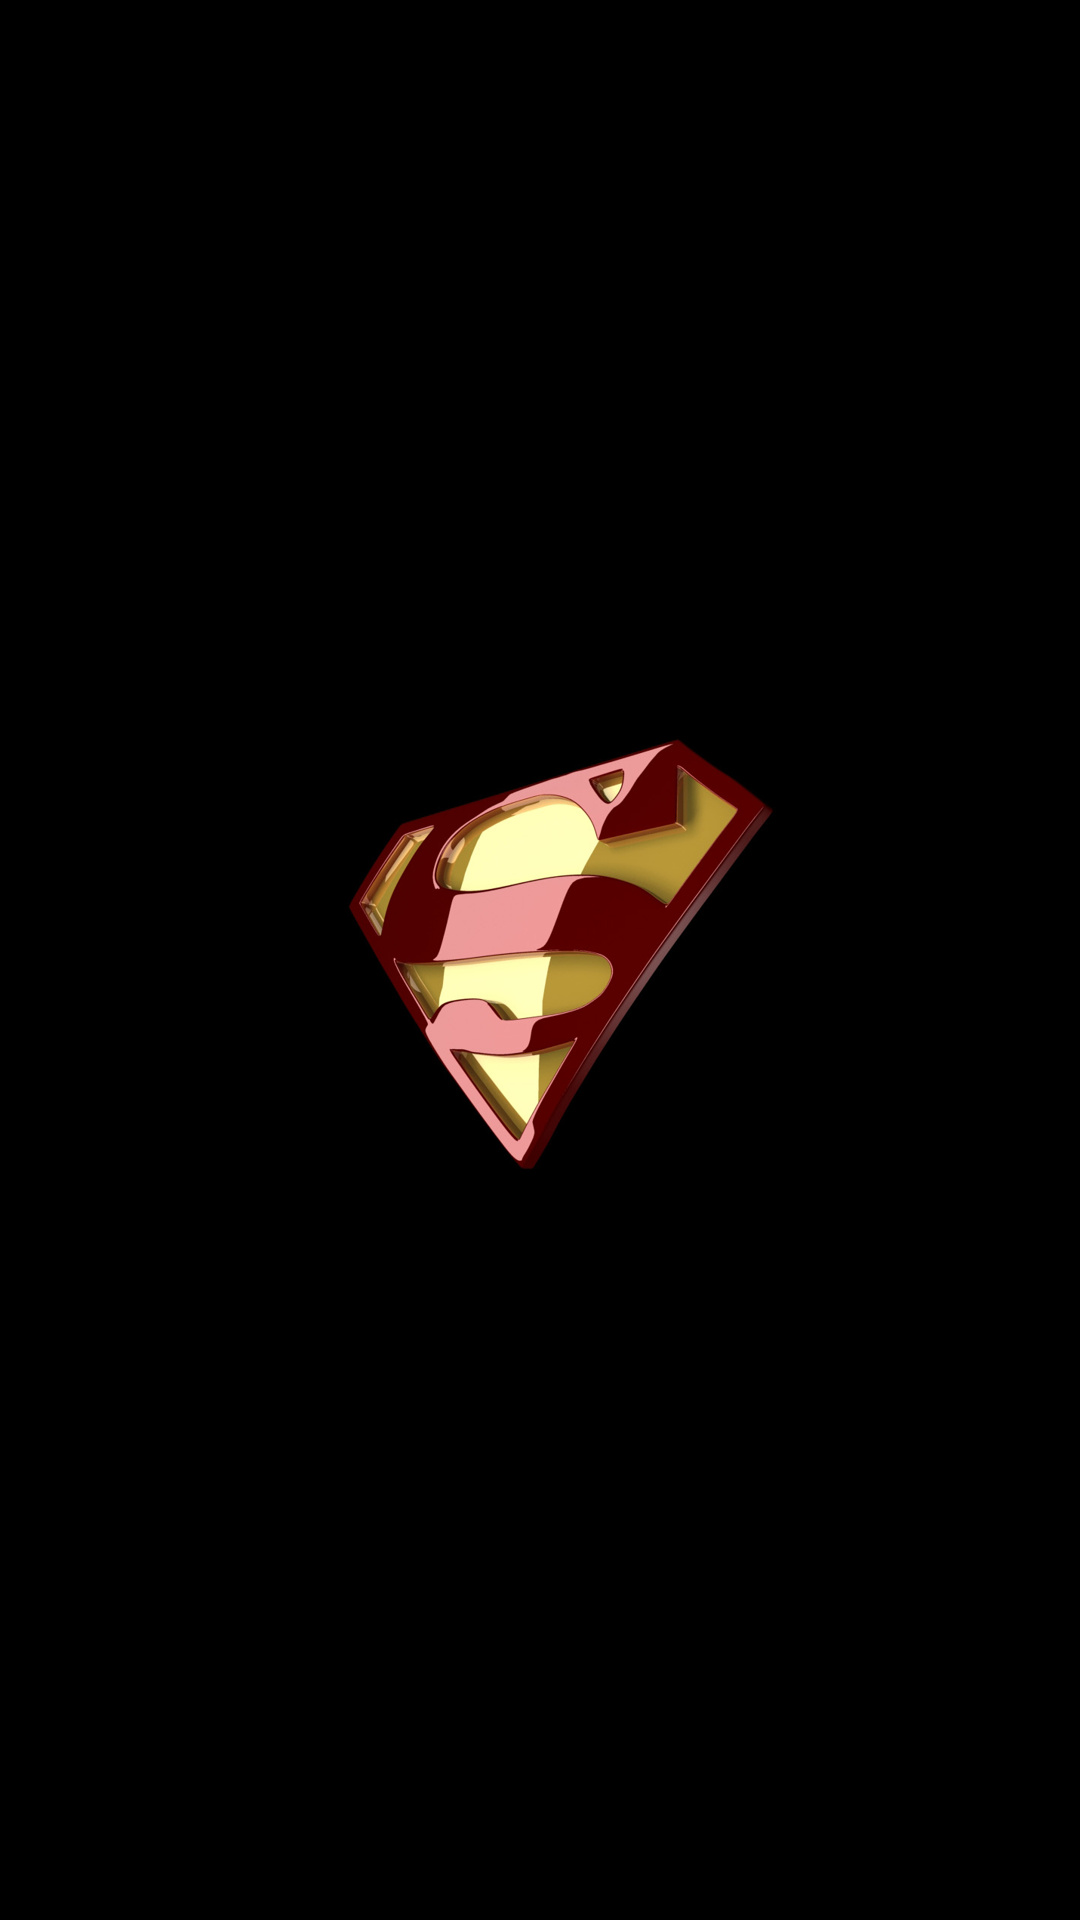 17355 superman logo iphone wallpaper hd